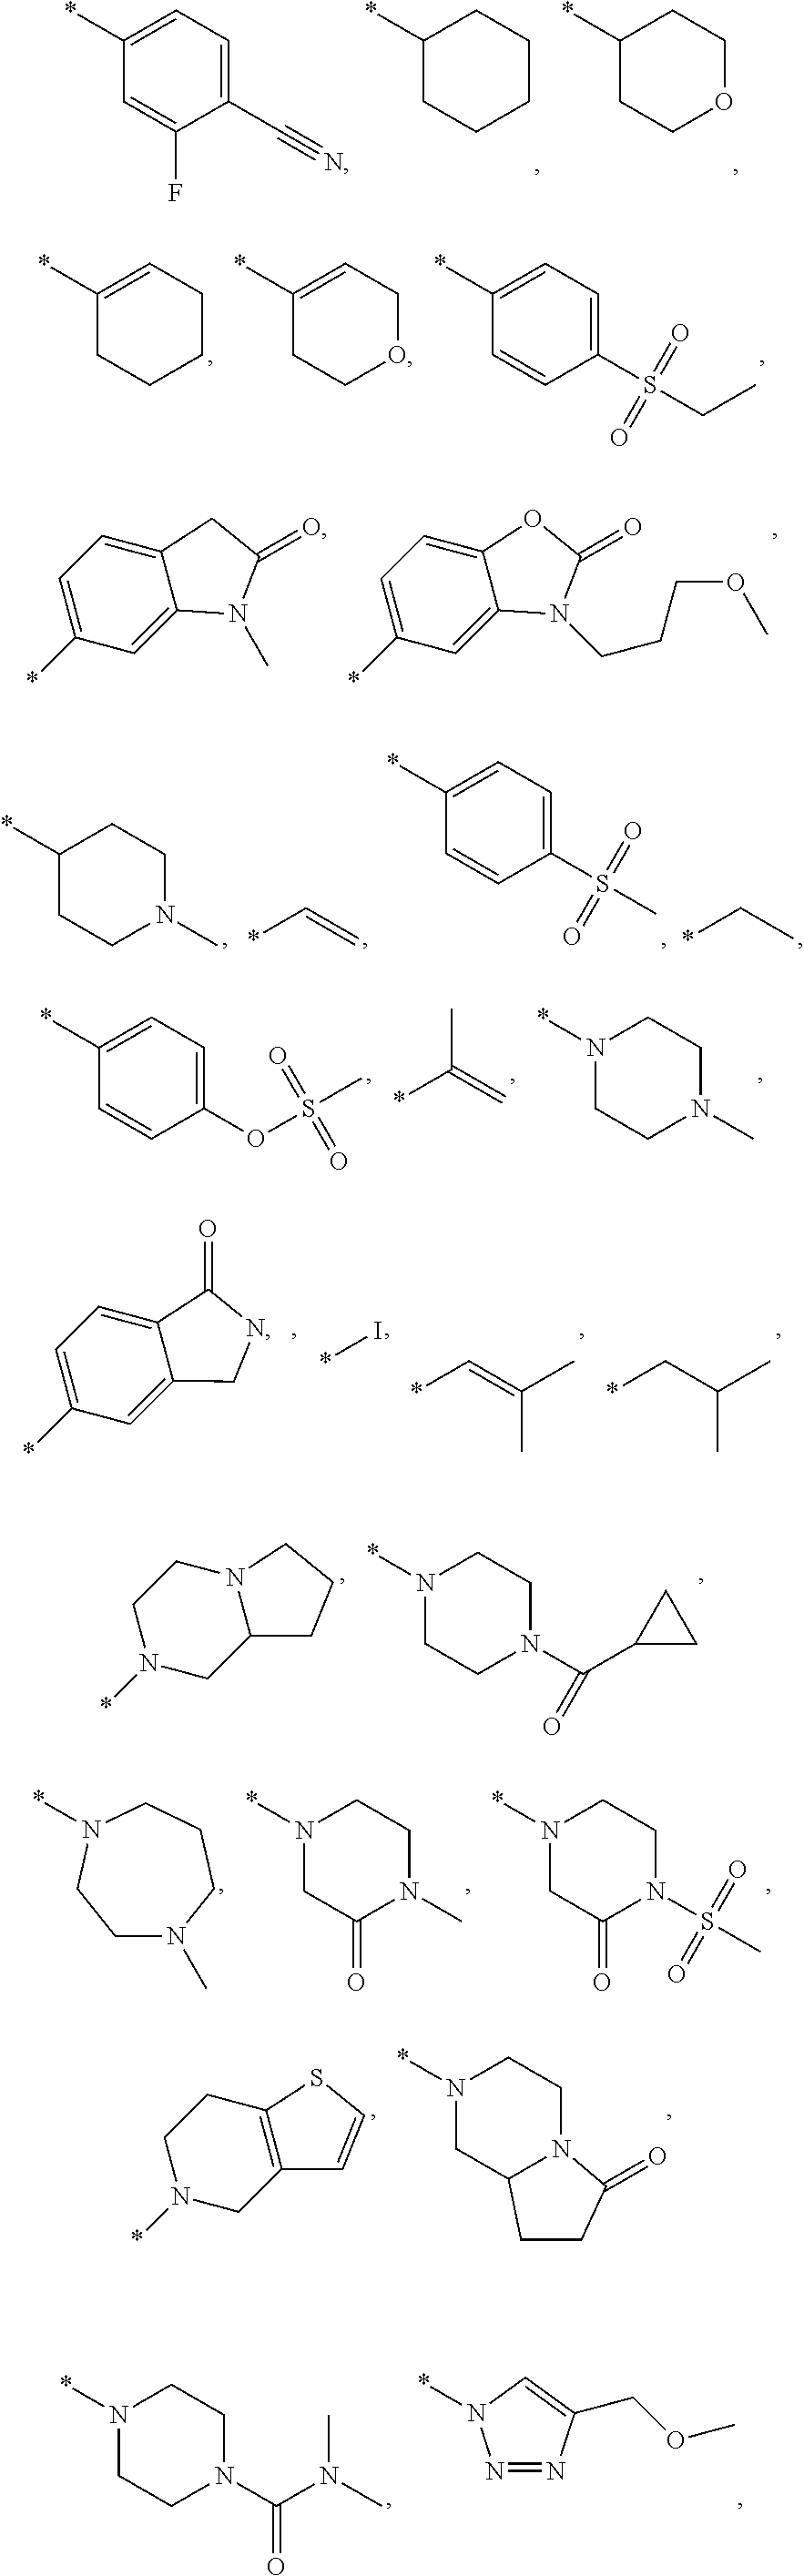 Substituted N- [1-cyano-2- (phenyl) ethyl] -2-azabicyclo [2.2.1] heptane-3-carboxamide inhibitors of cathepsin C